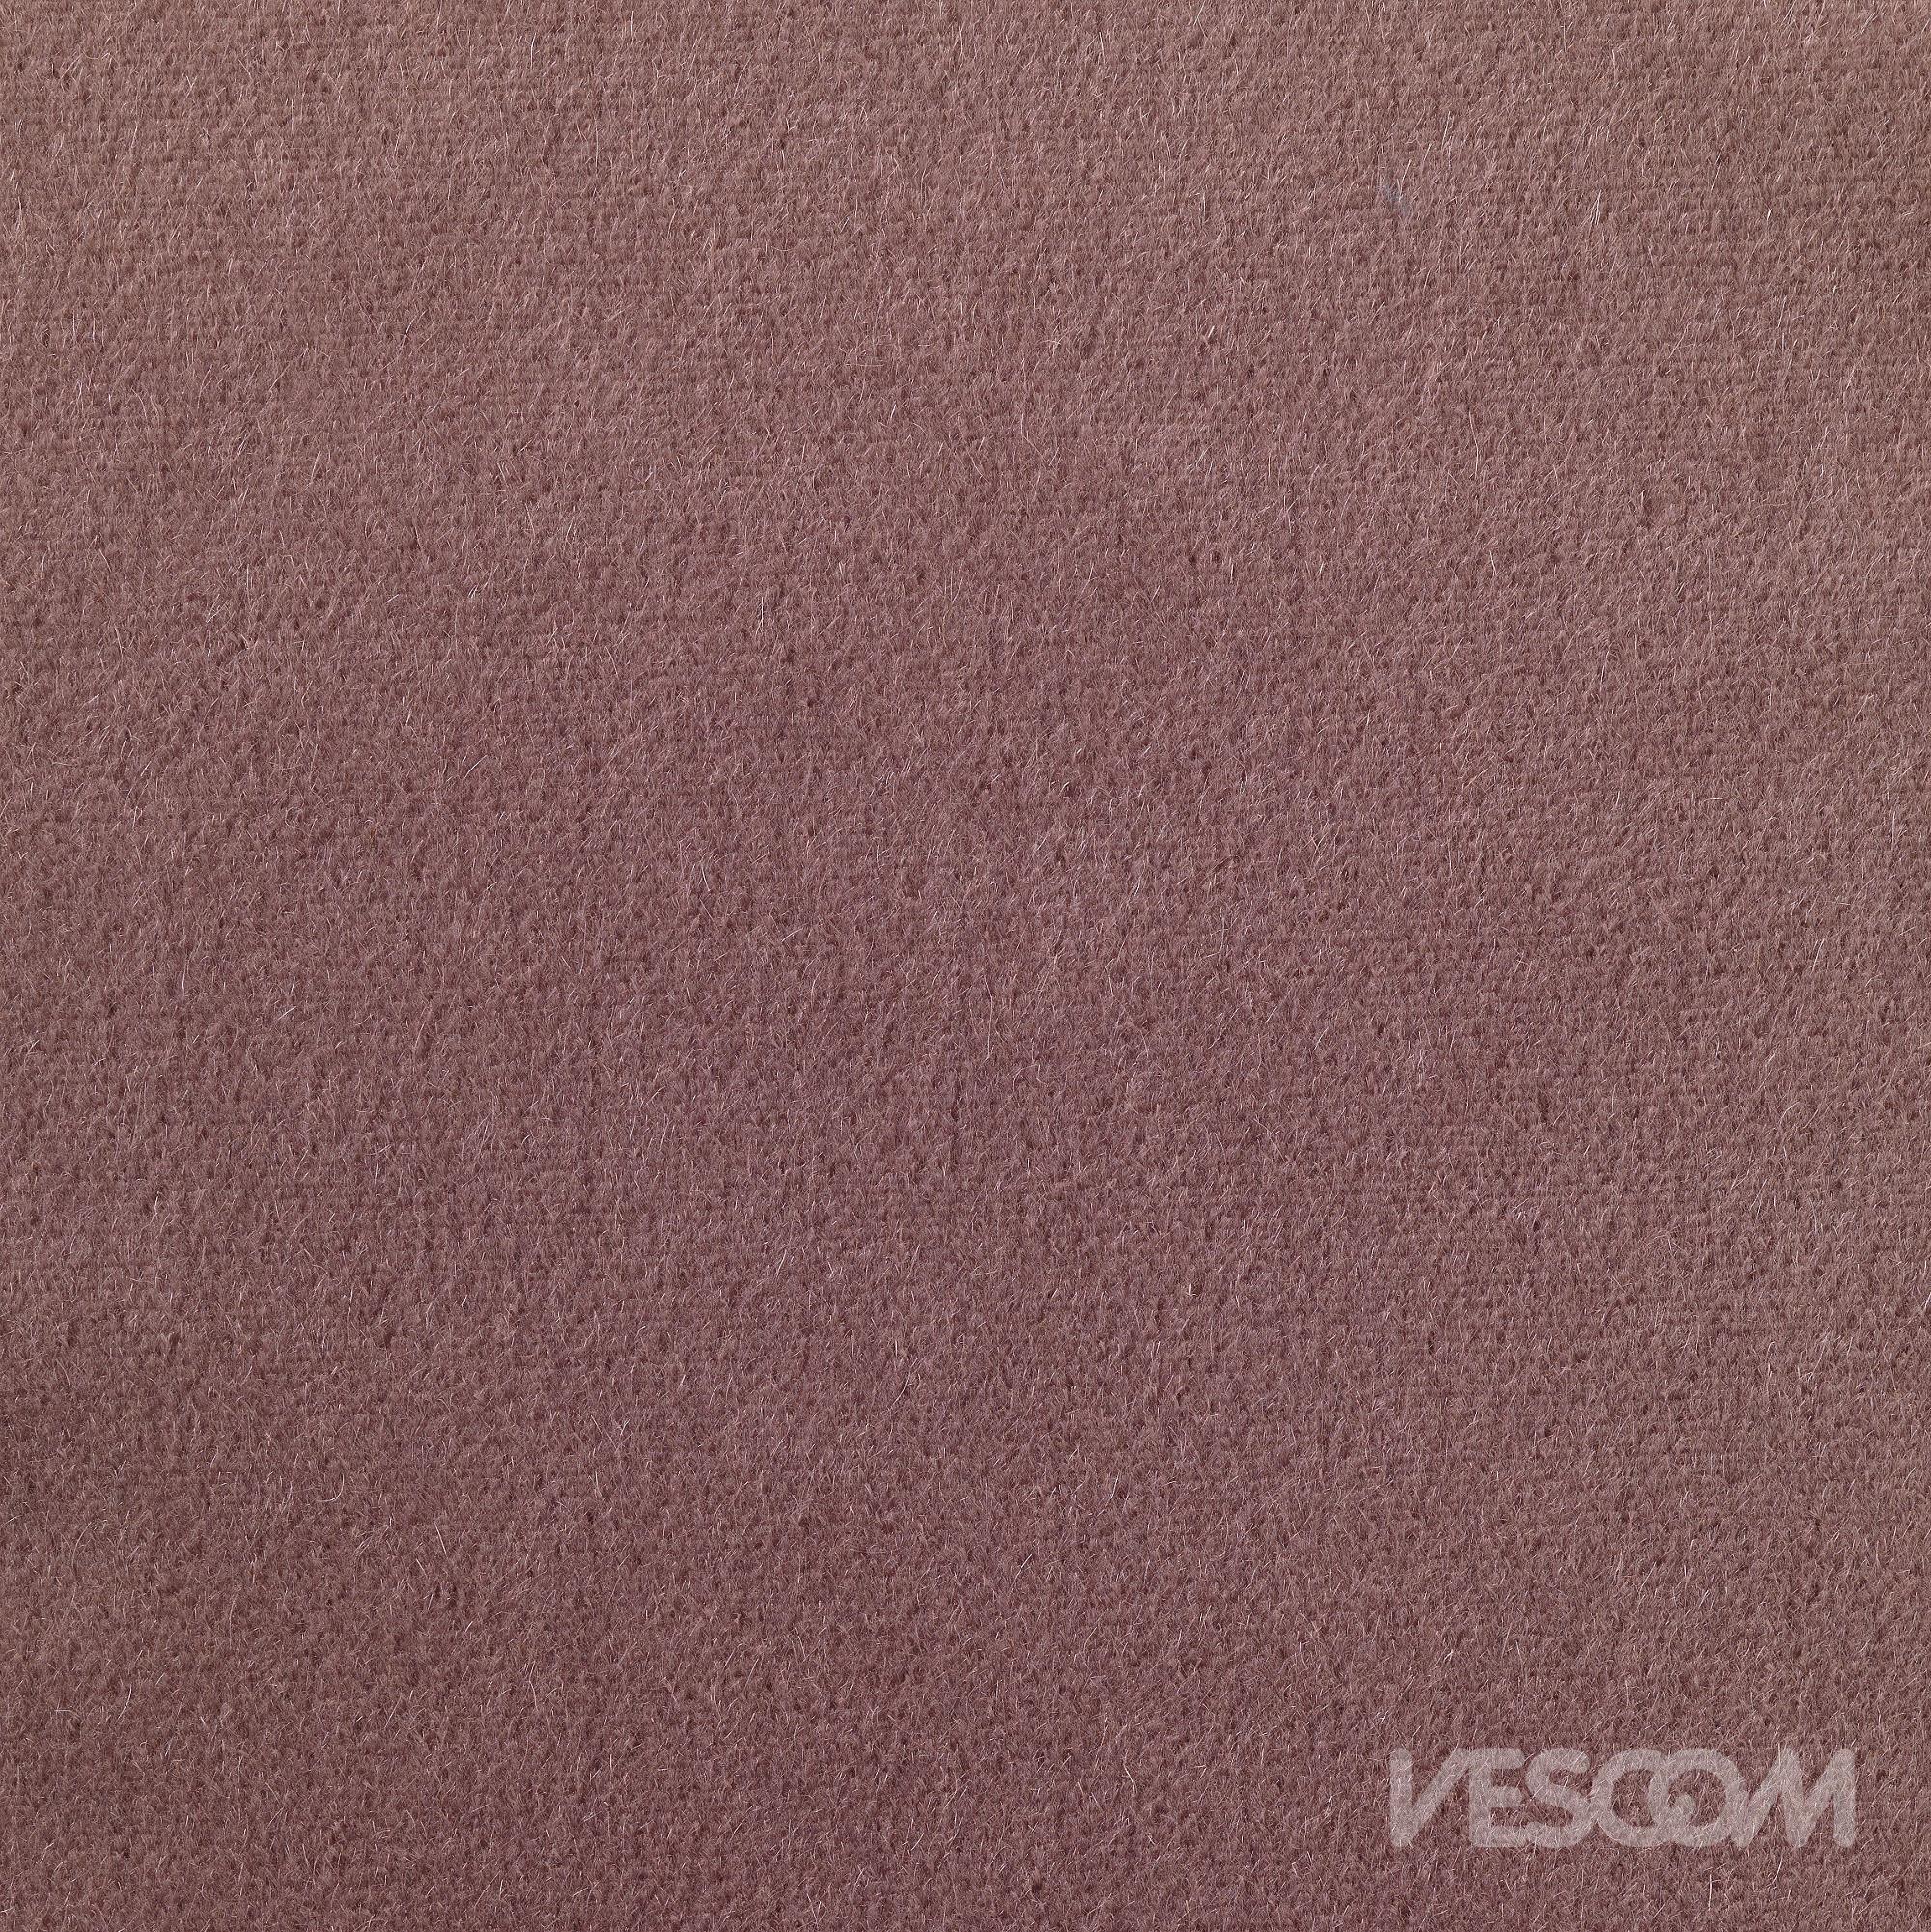 Vescom Ariana Upholstery Fabric 7061.22